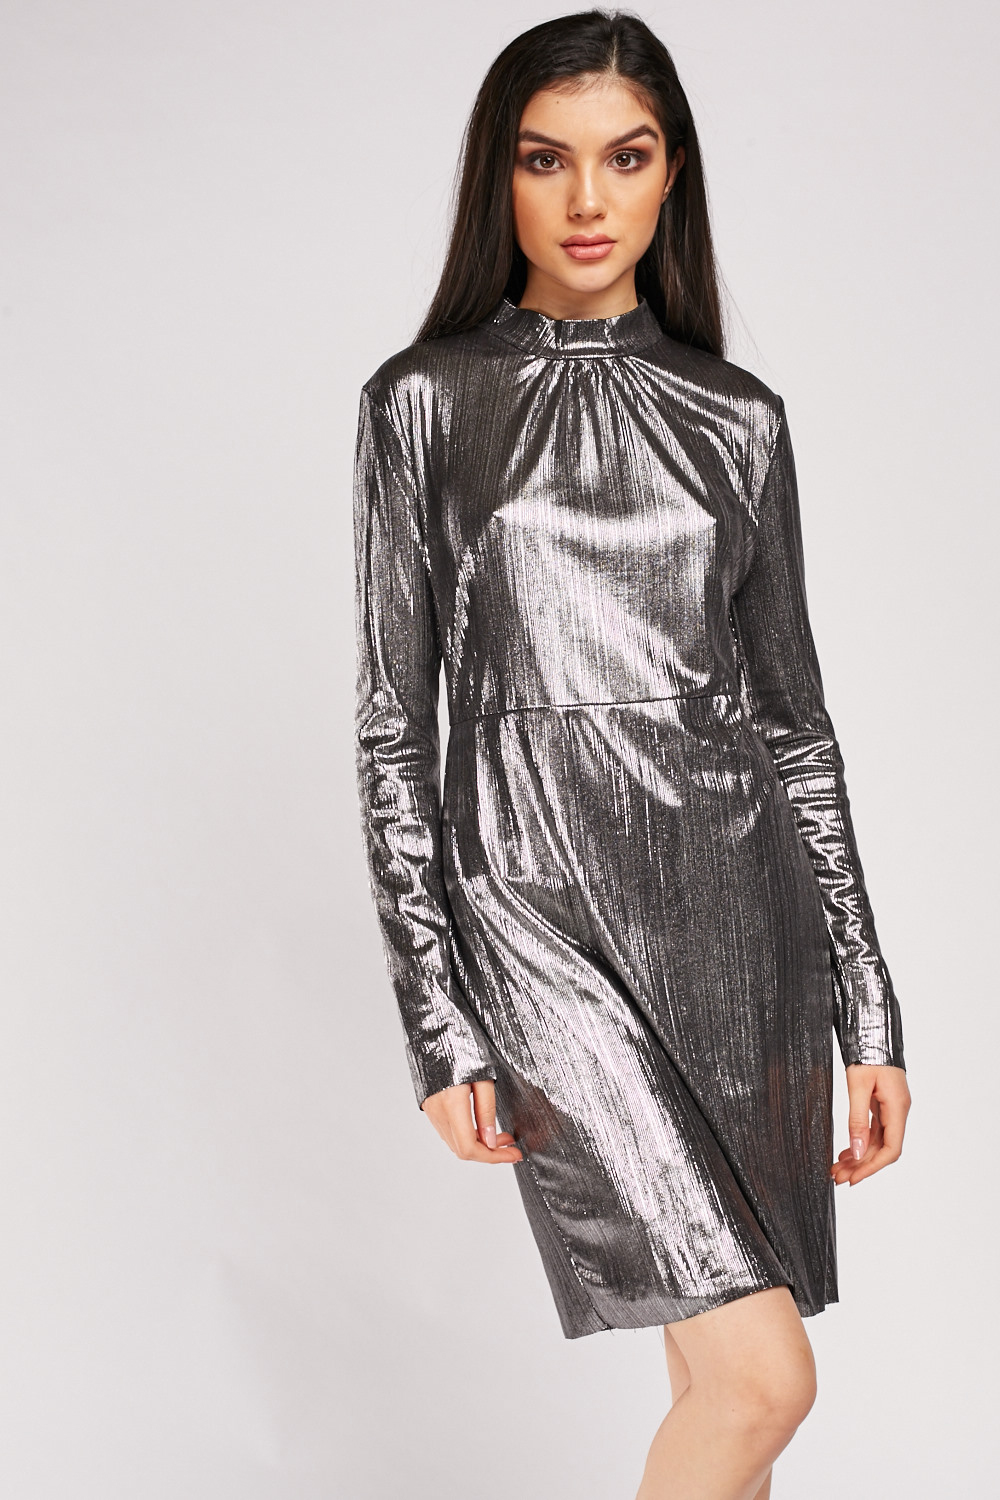 Silver Metallic Plisse Dress - Just $7